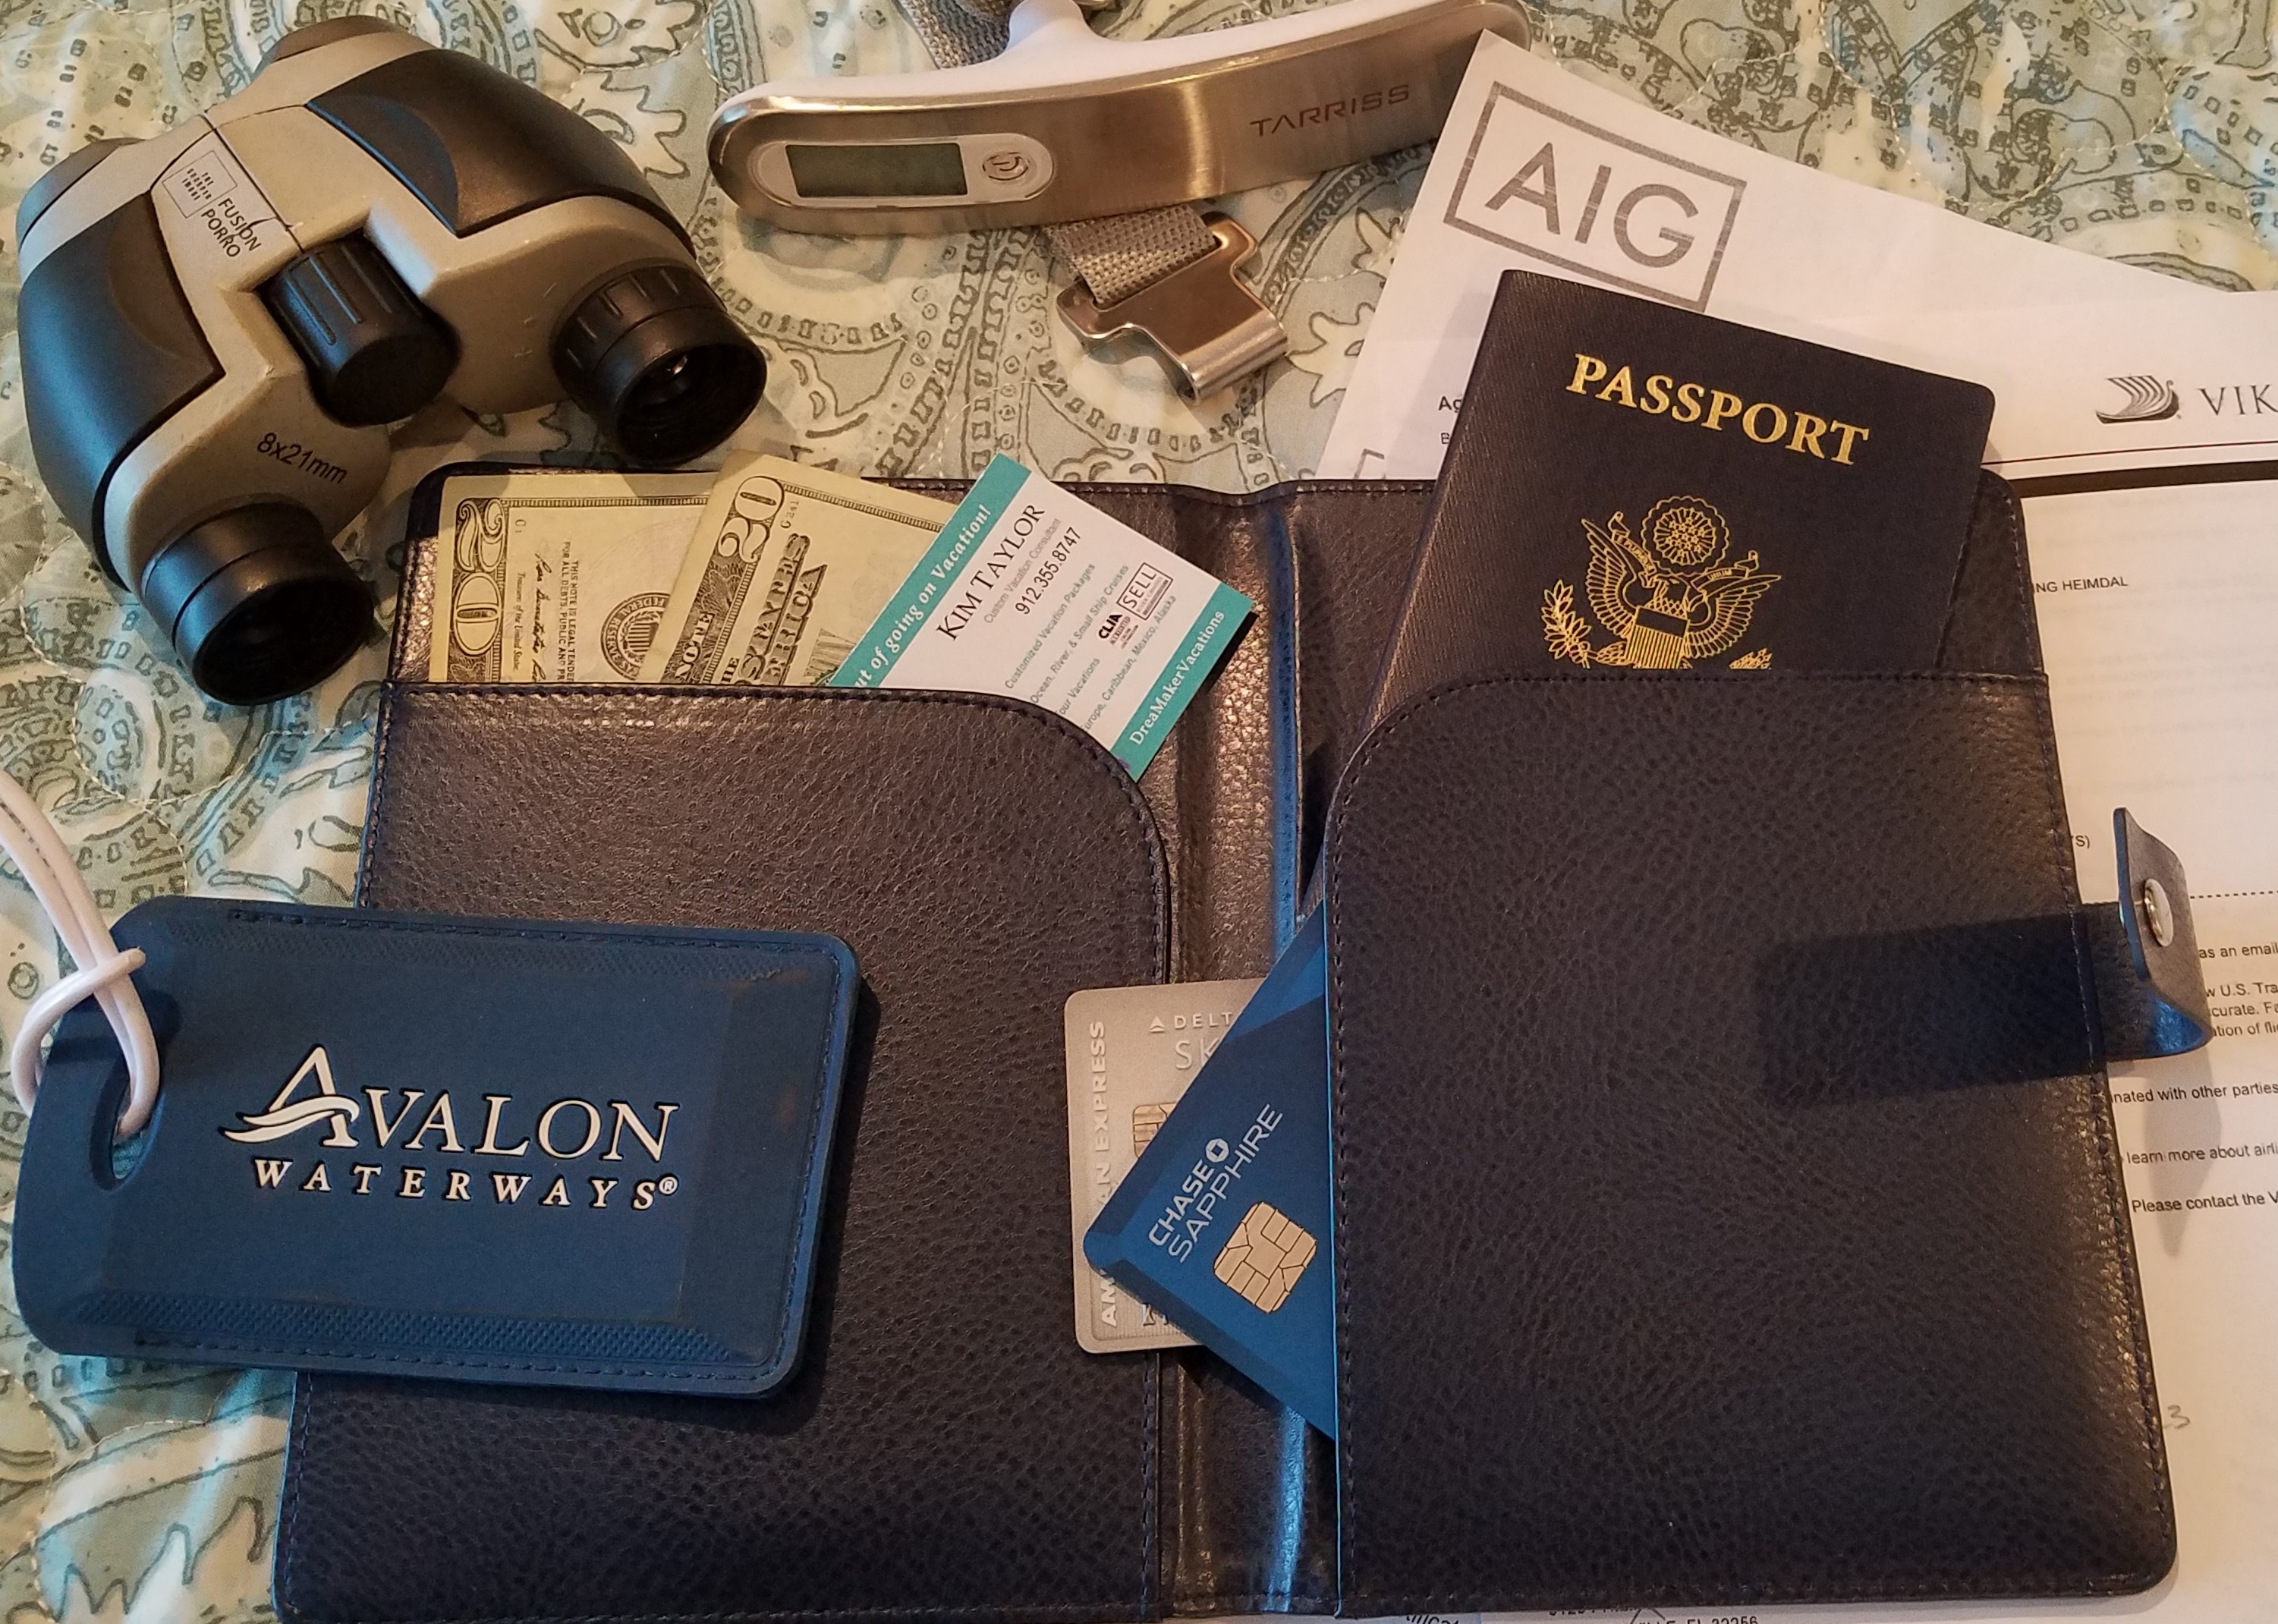 Passport, Travel Wallet, Travel Documents, Cash, Credit Cards